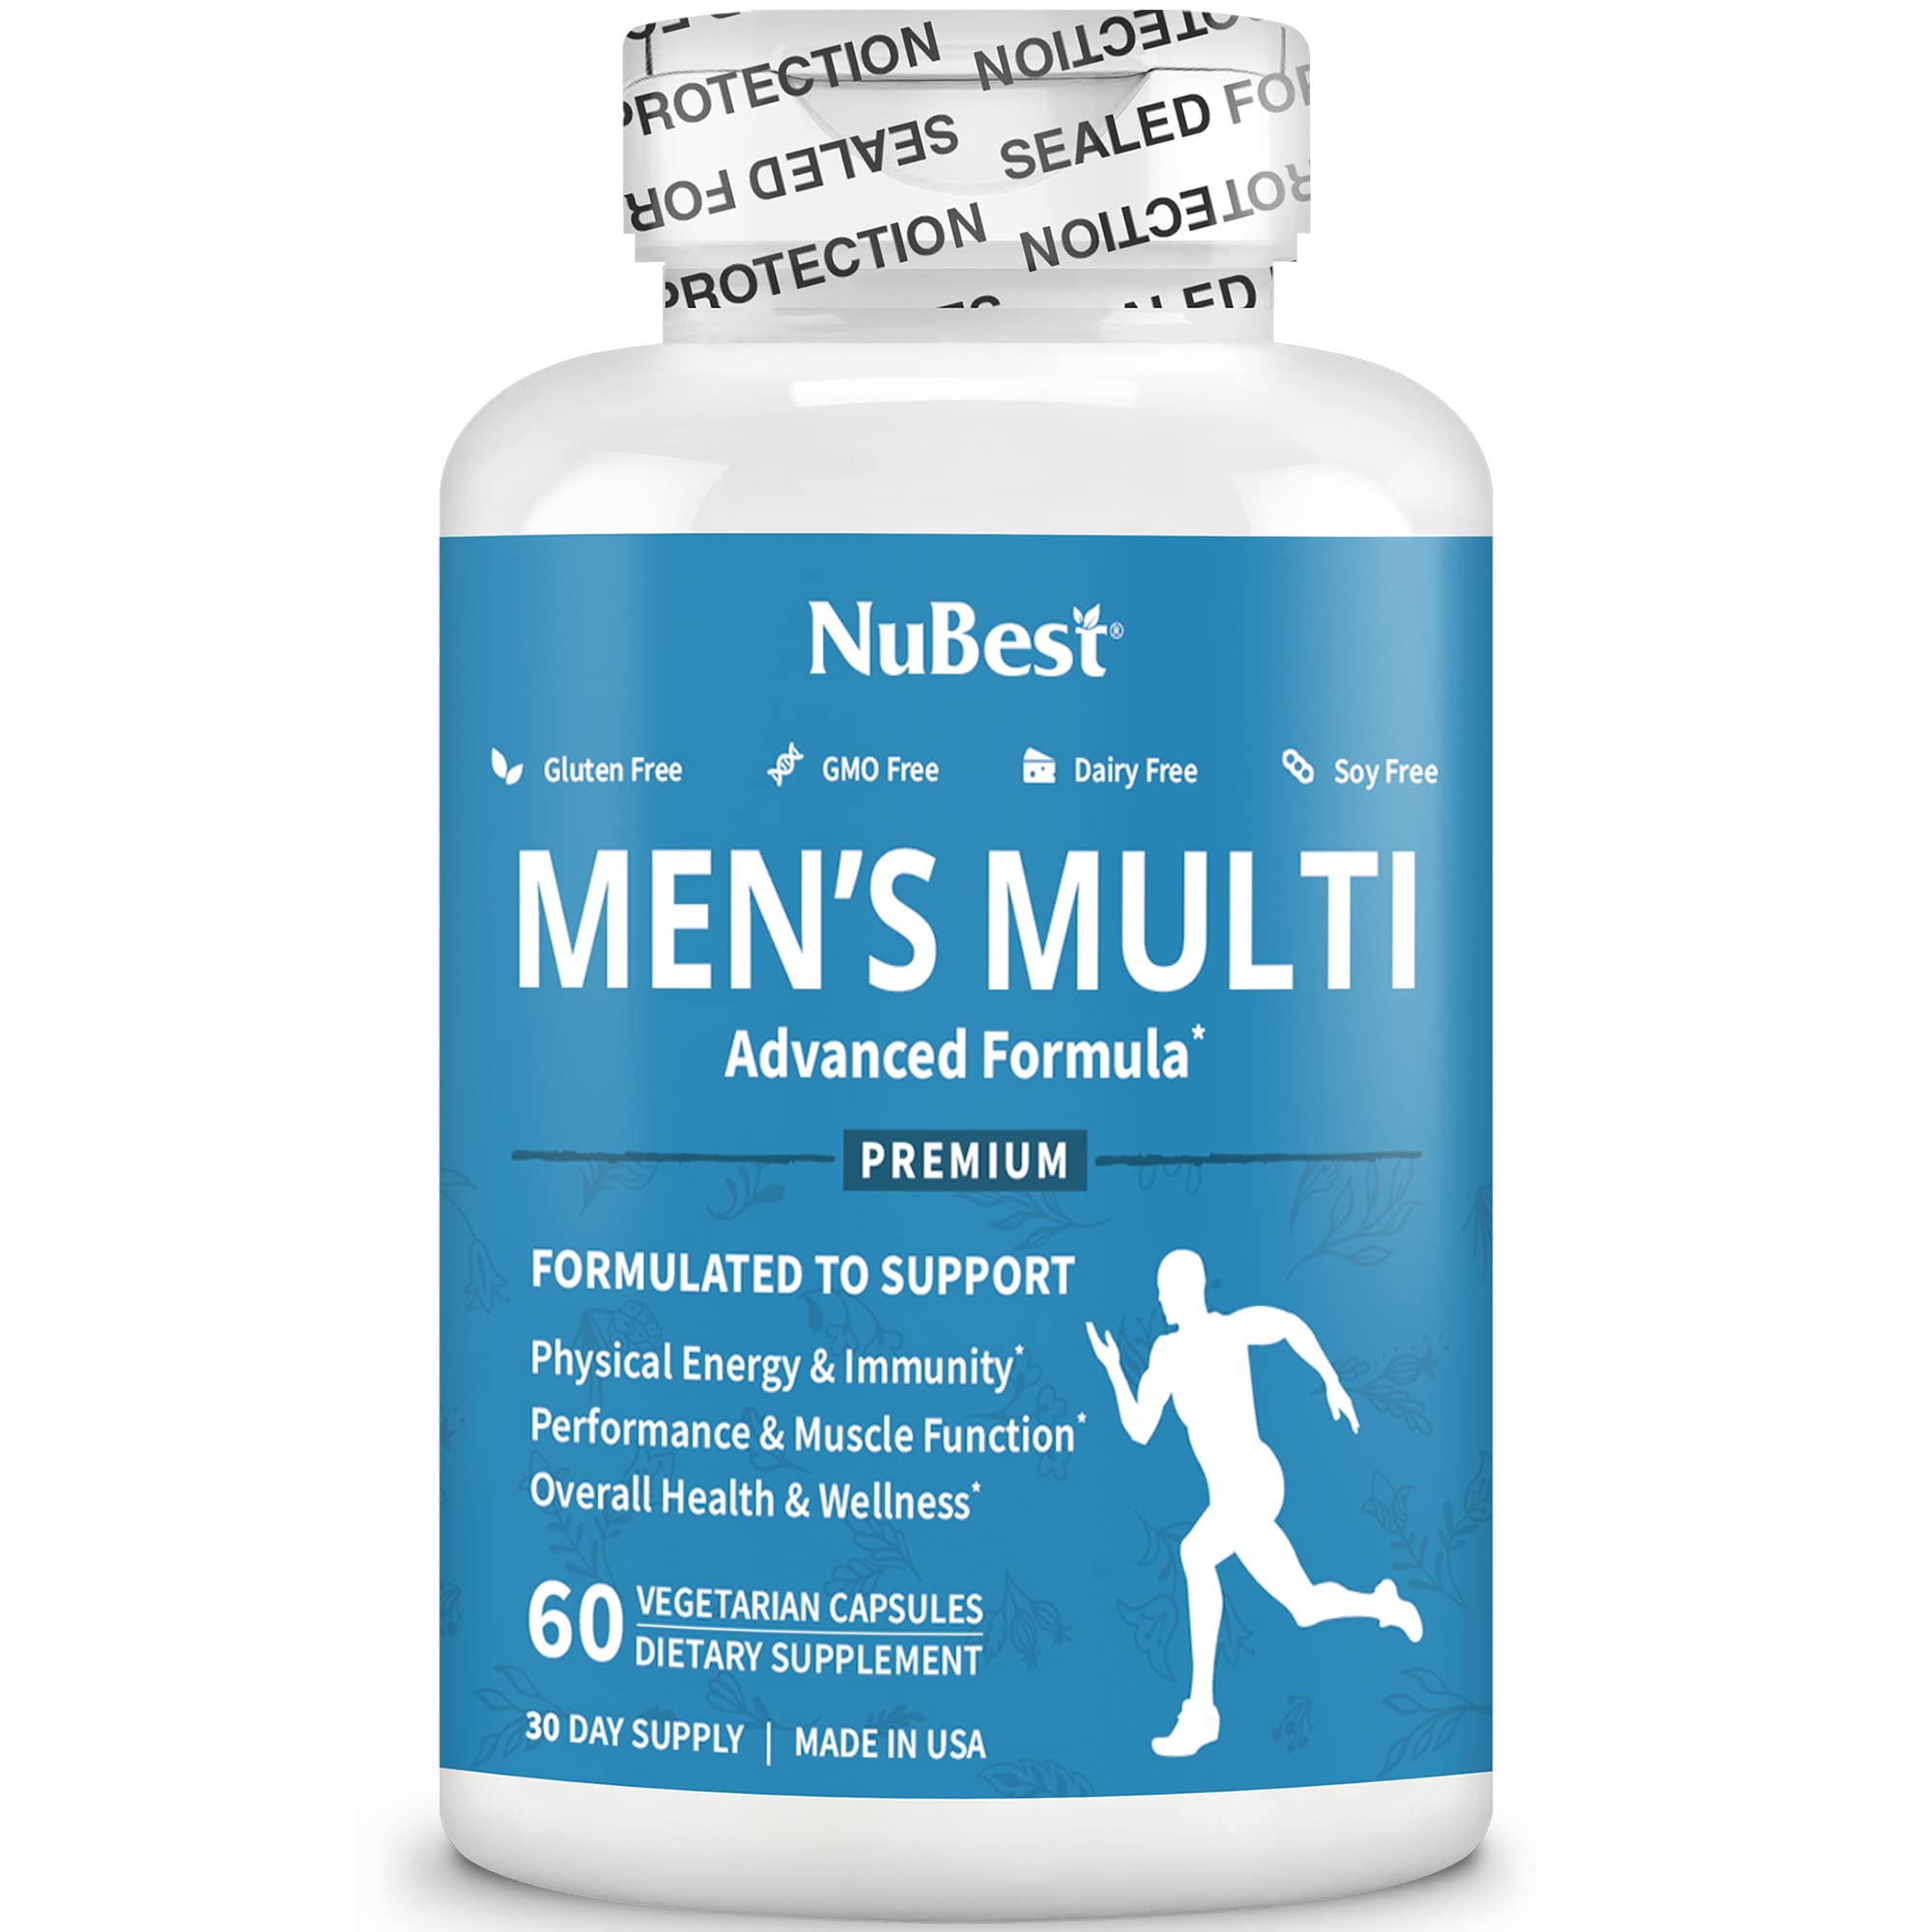 NuBest Men’s Multi 18+ - Multivitamin for Men - Daily Men's Multivitamins & Multimineral Supplement with Ashwagandha, Turmeric, Ginseng, Calcium & More - Energy, Muscle Strength - 60 Vegan Capsules